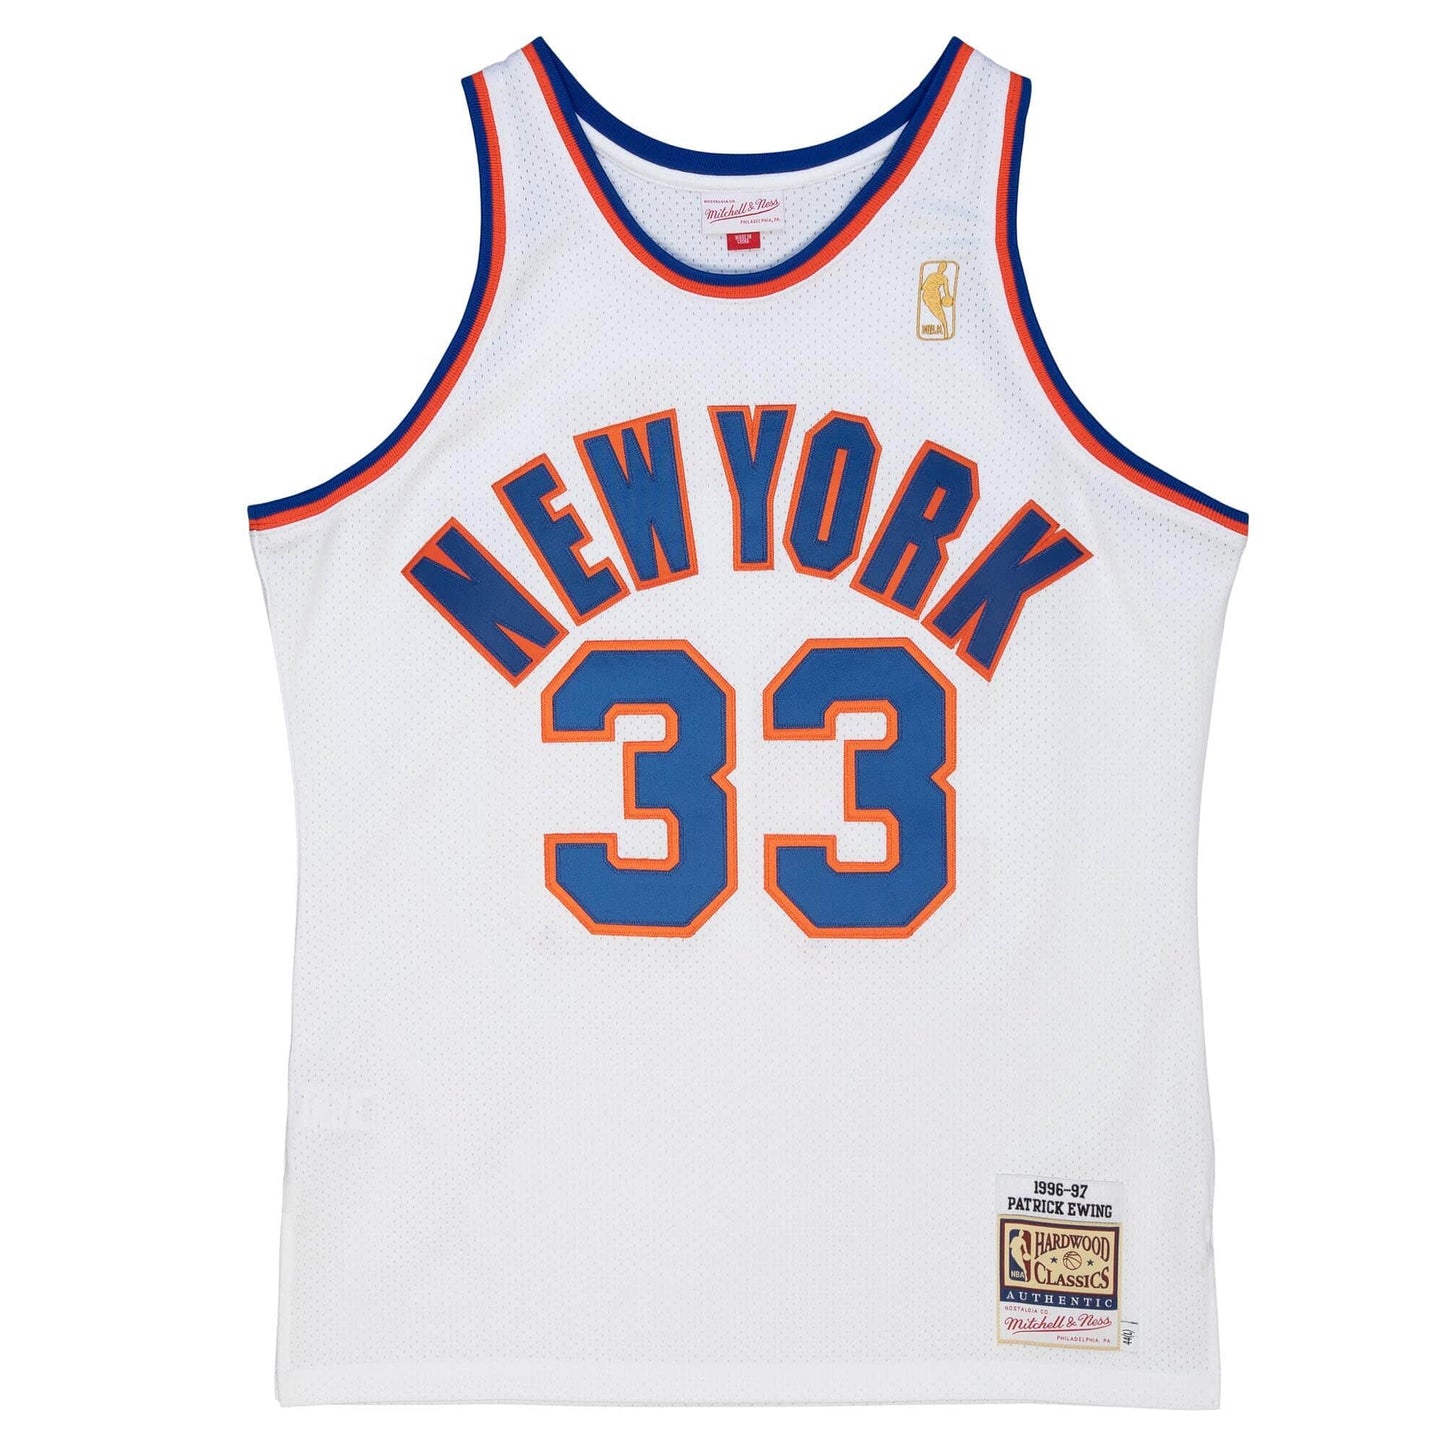 Authentic Patrick Ewing New York Knicks 1996-97 Jersey